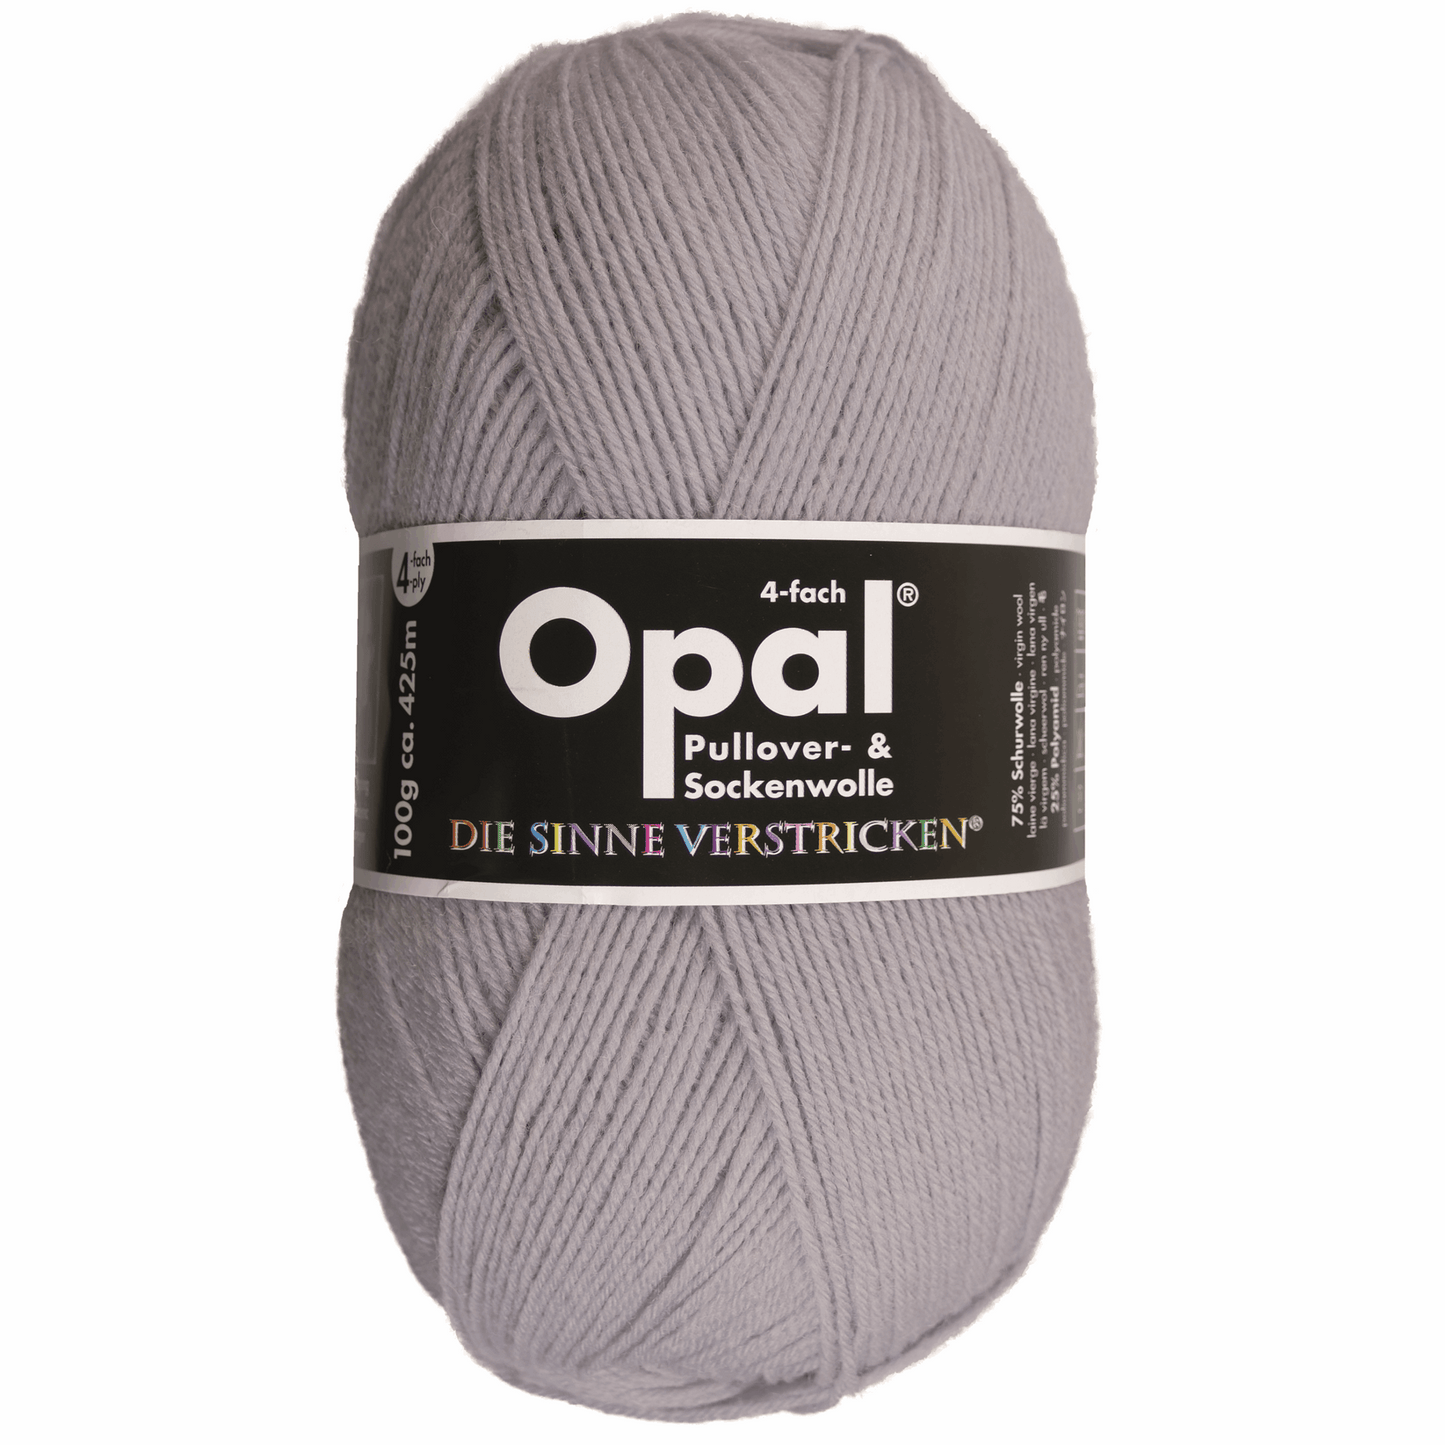 Opal uni 4fädig. 100g 2011/12, 97760, Farbe silber 9937